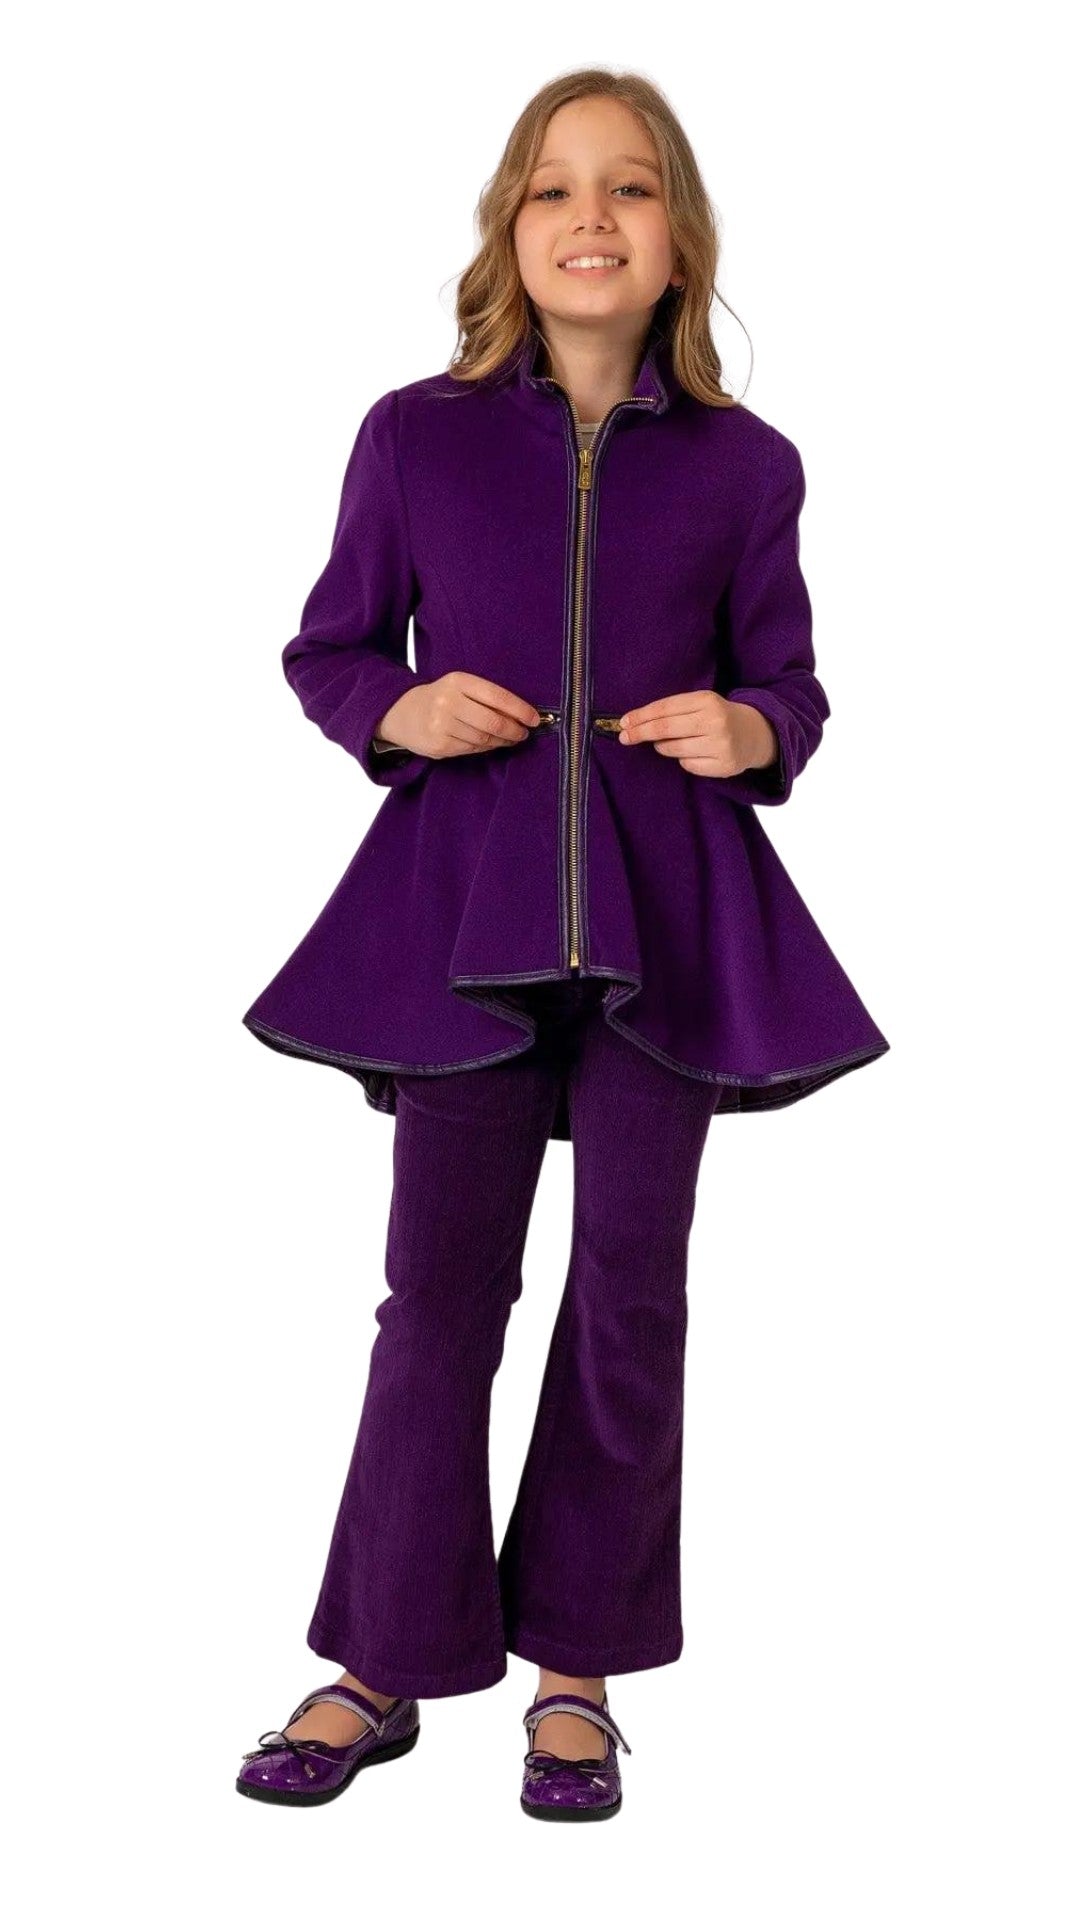 InCity Girls 7-14 Years Tween Purple Full Zipper Fashion Ferra Coat with Skirt Bottom InCity Boys & Girls